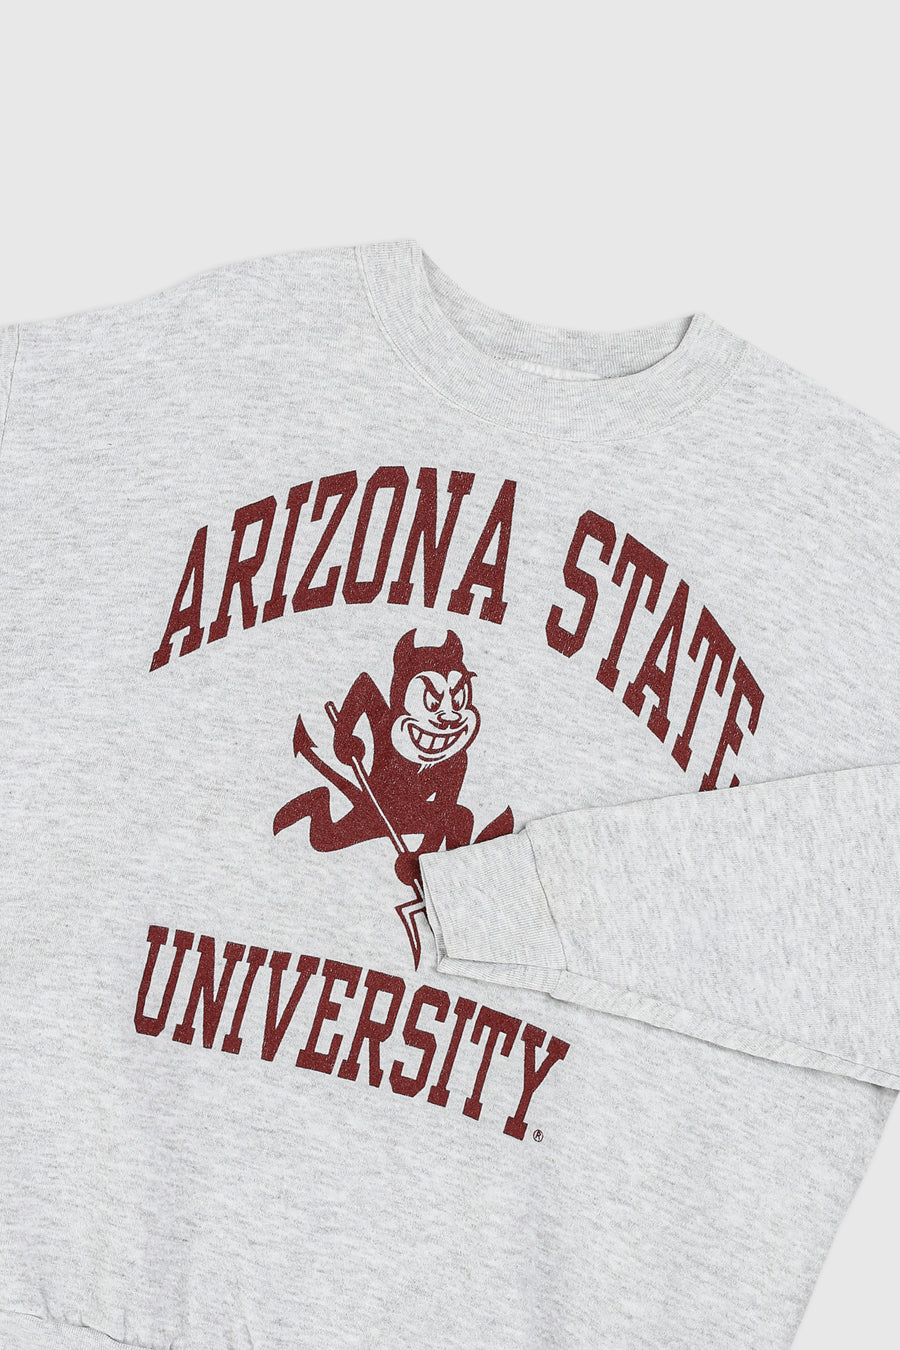 Vintage Arizona University Sweatshirt - M